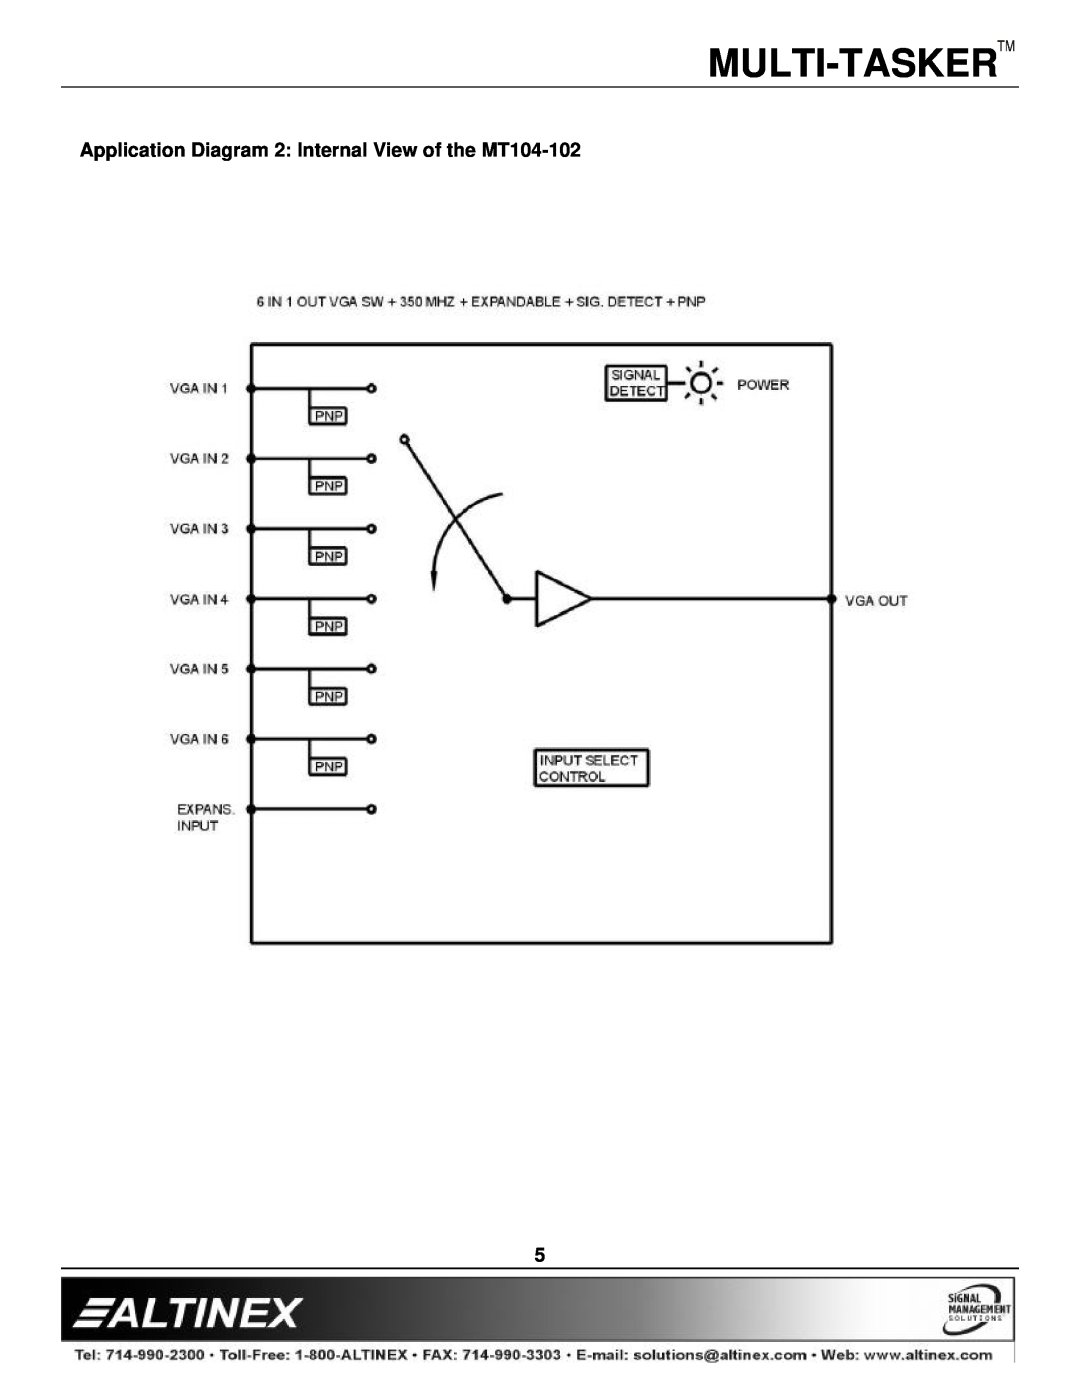 Altinex manual Multi-Tasker, Application Diagram 2 Internal View of the MT104-102 